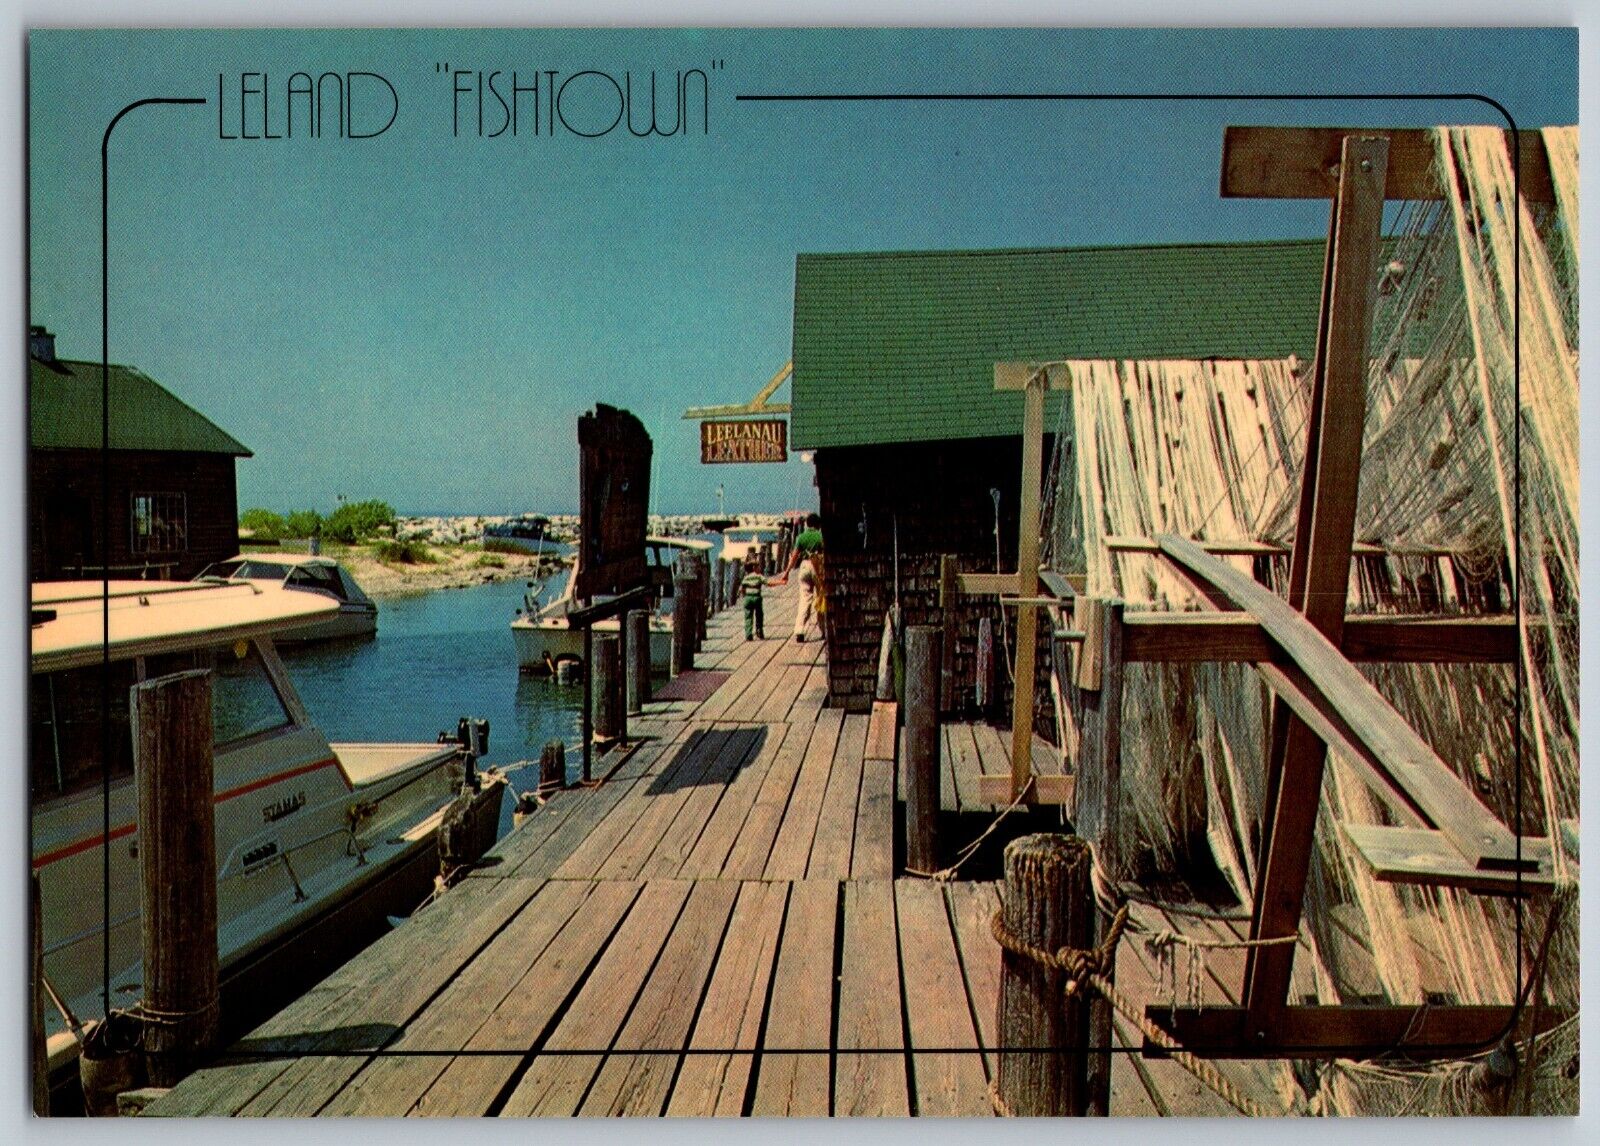 Leland, Michigan MI - The Quaint Village - Fishtown - Vintage Postcard 4x6